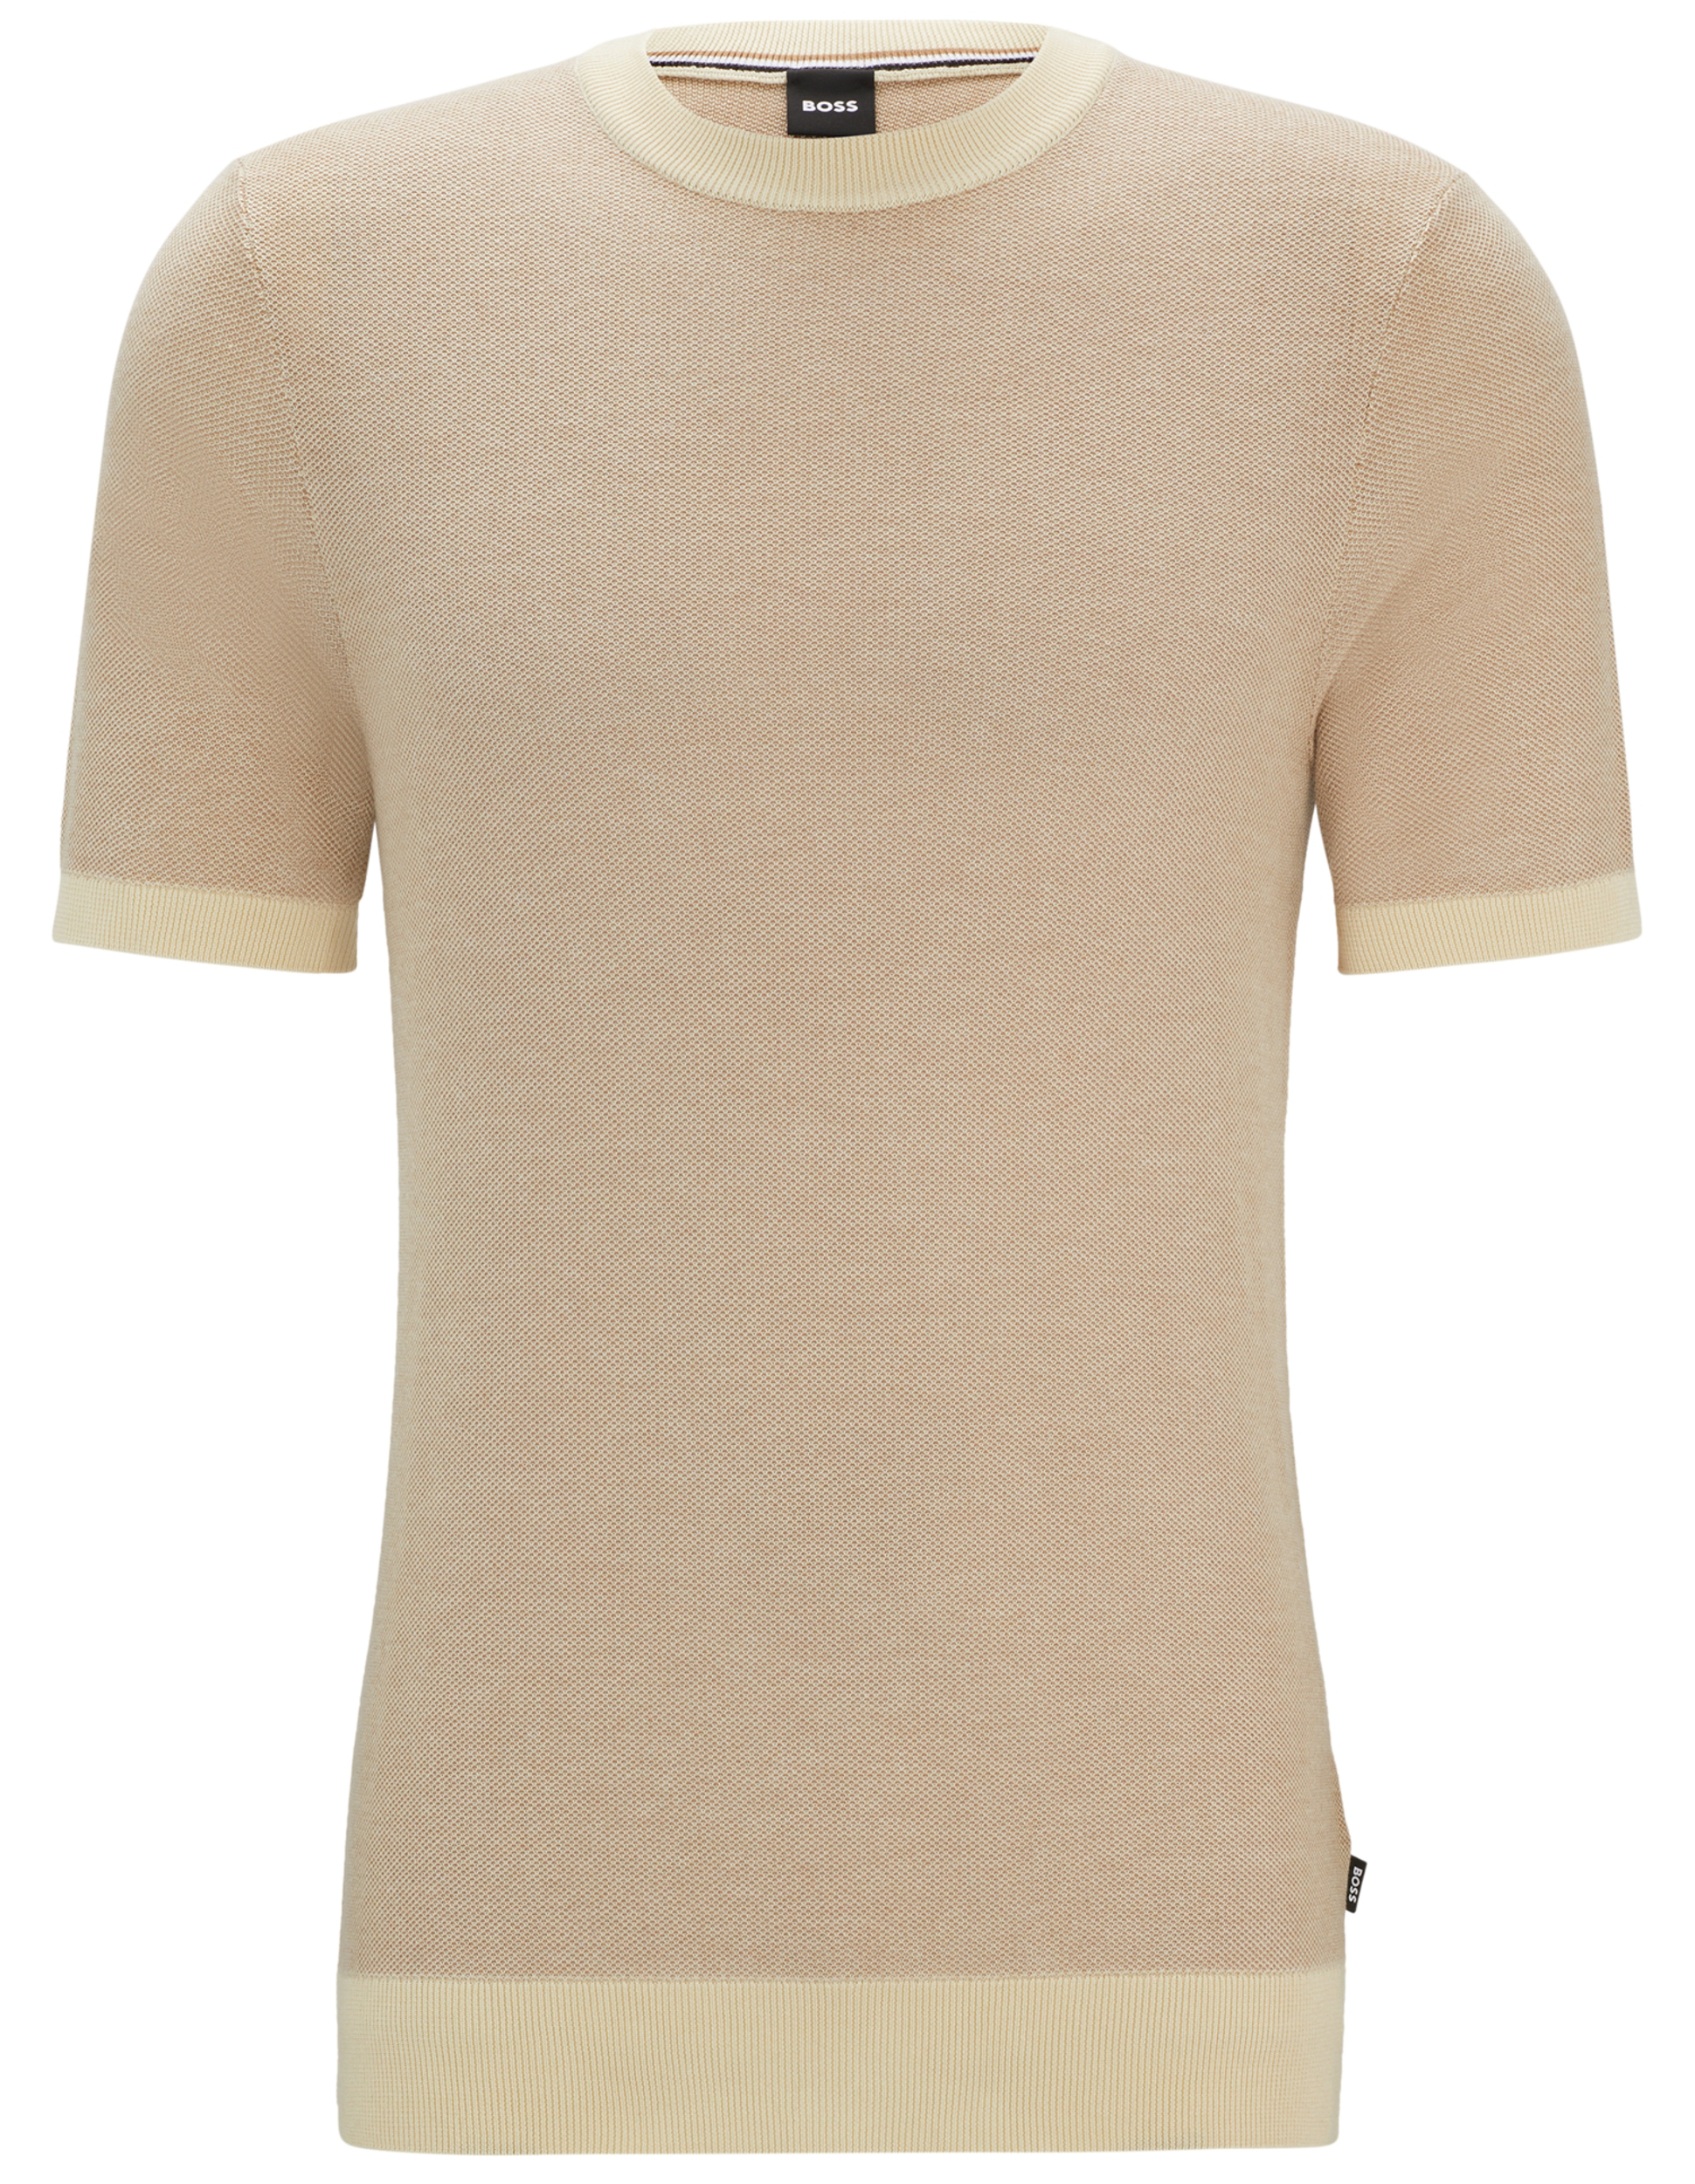 BOSS T-Shirt Kurzarm Strick Shirt mit filigraner Struktur